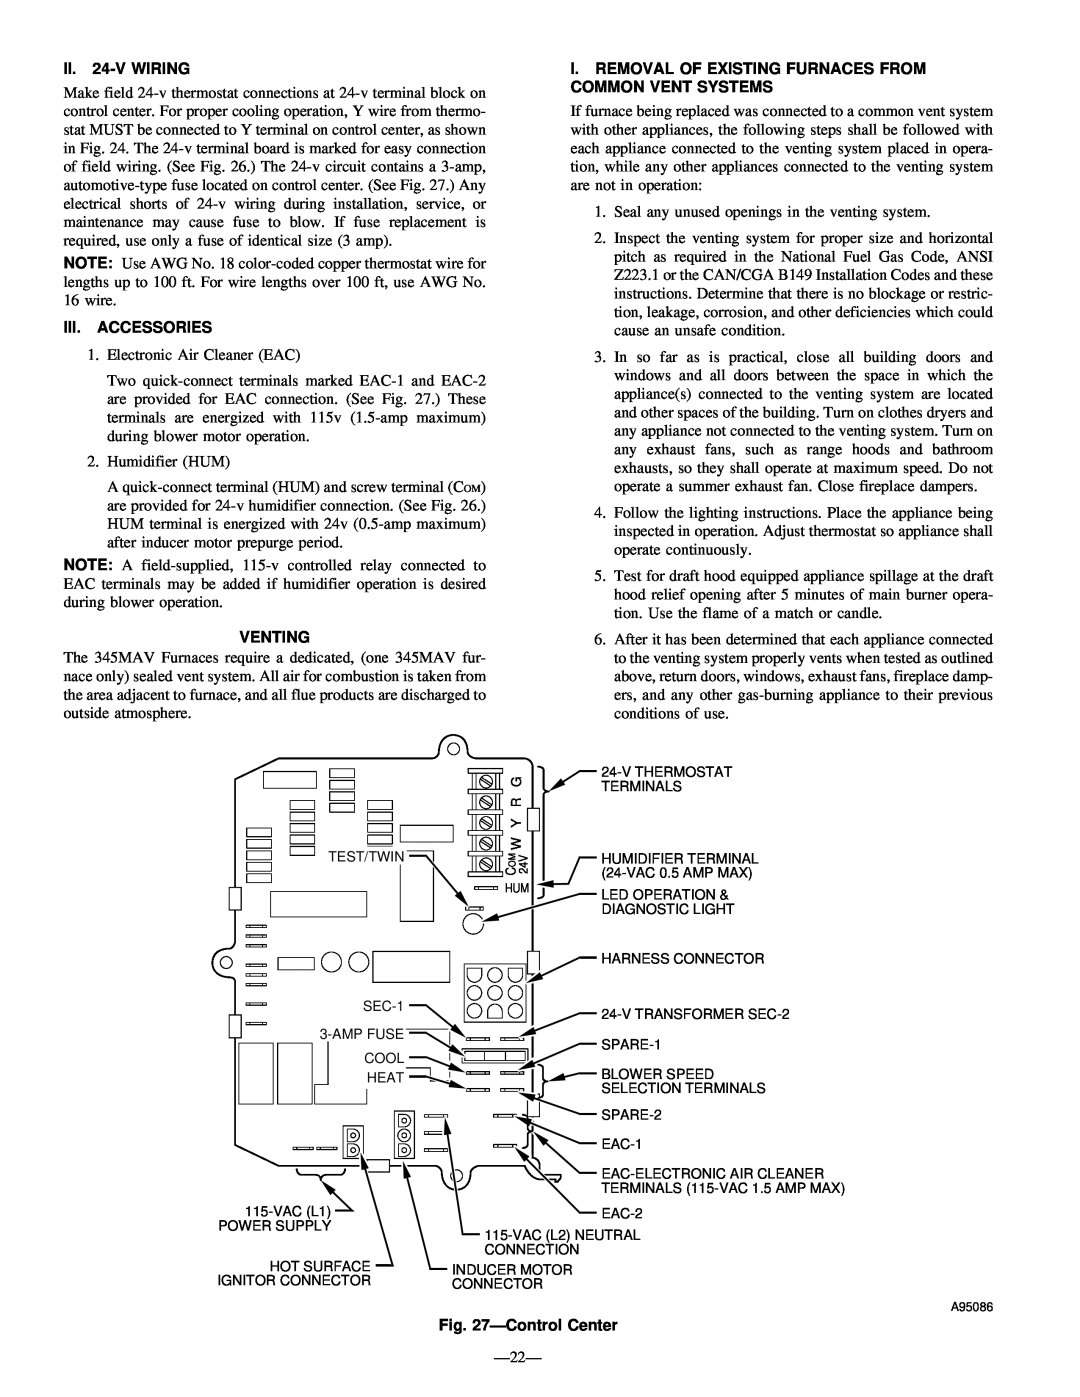 Bryant 345MAV instruction manual II.24-VWIRING, Iii.Accessories, Venting, ÐControl Center 